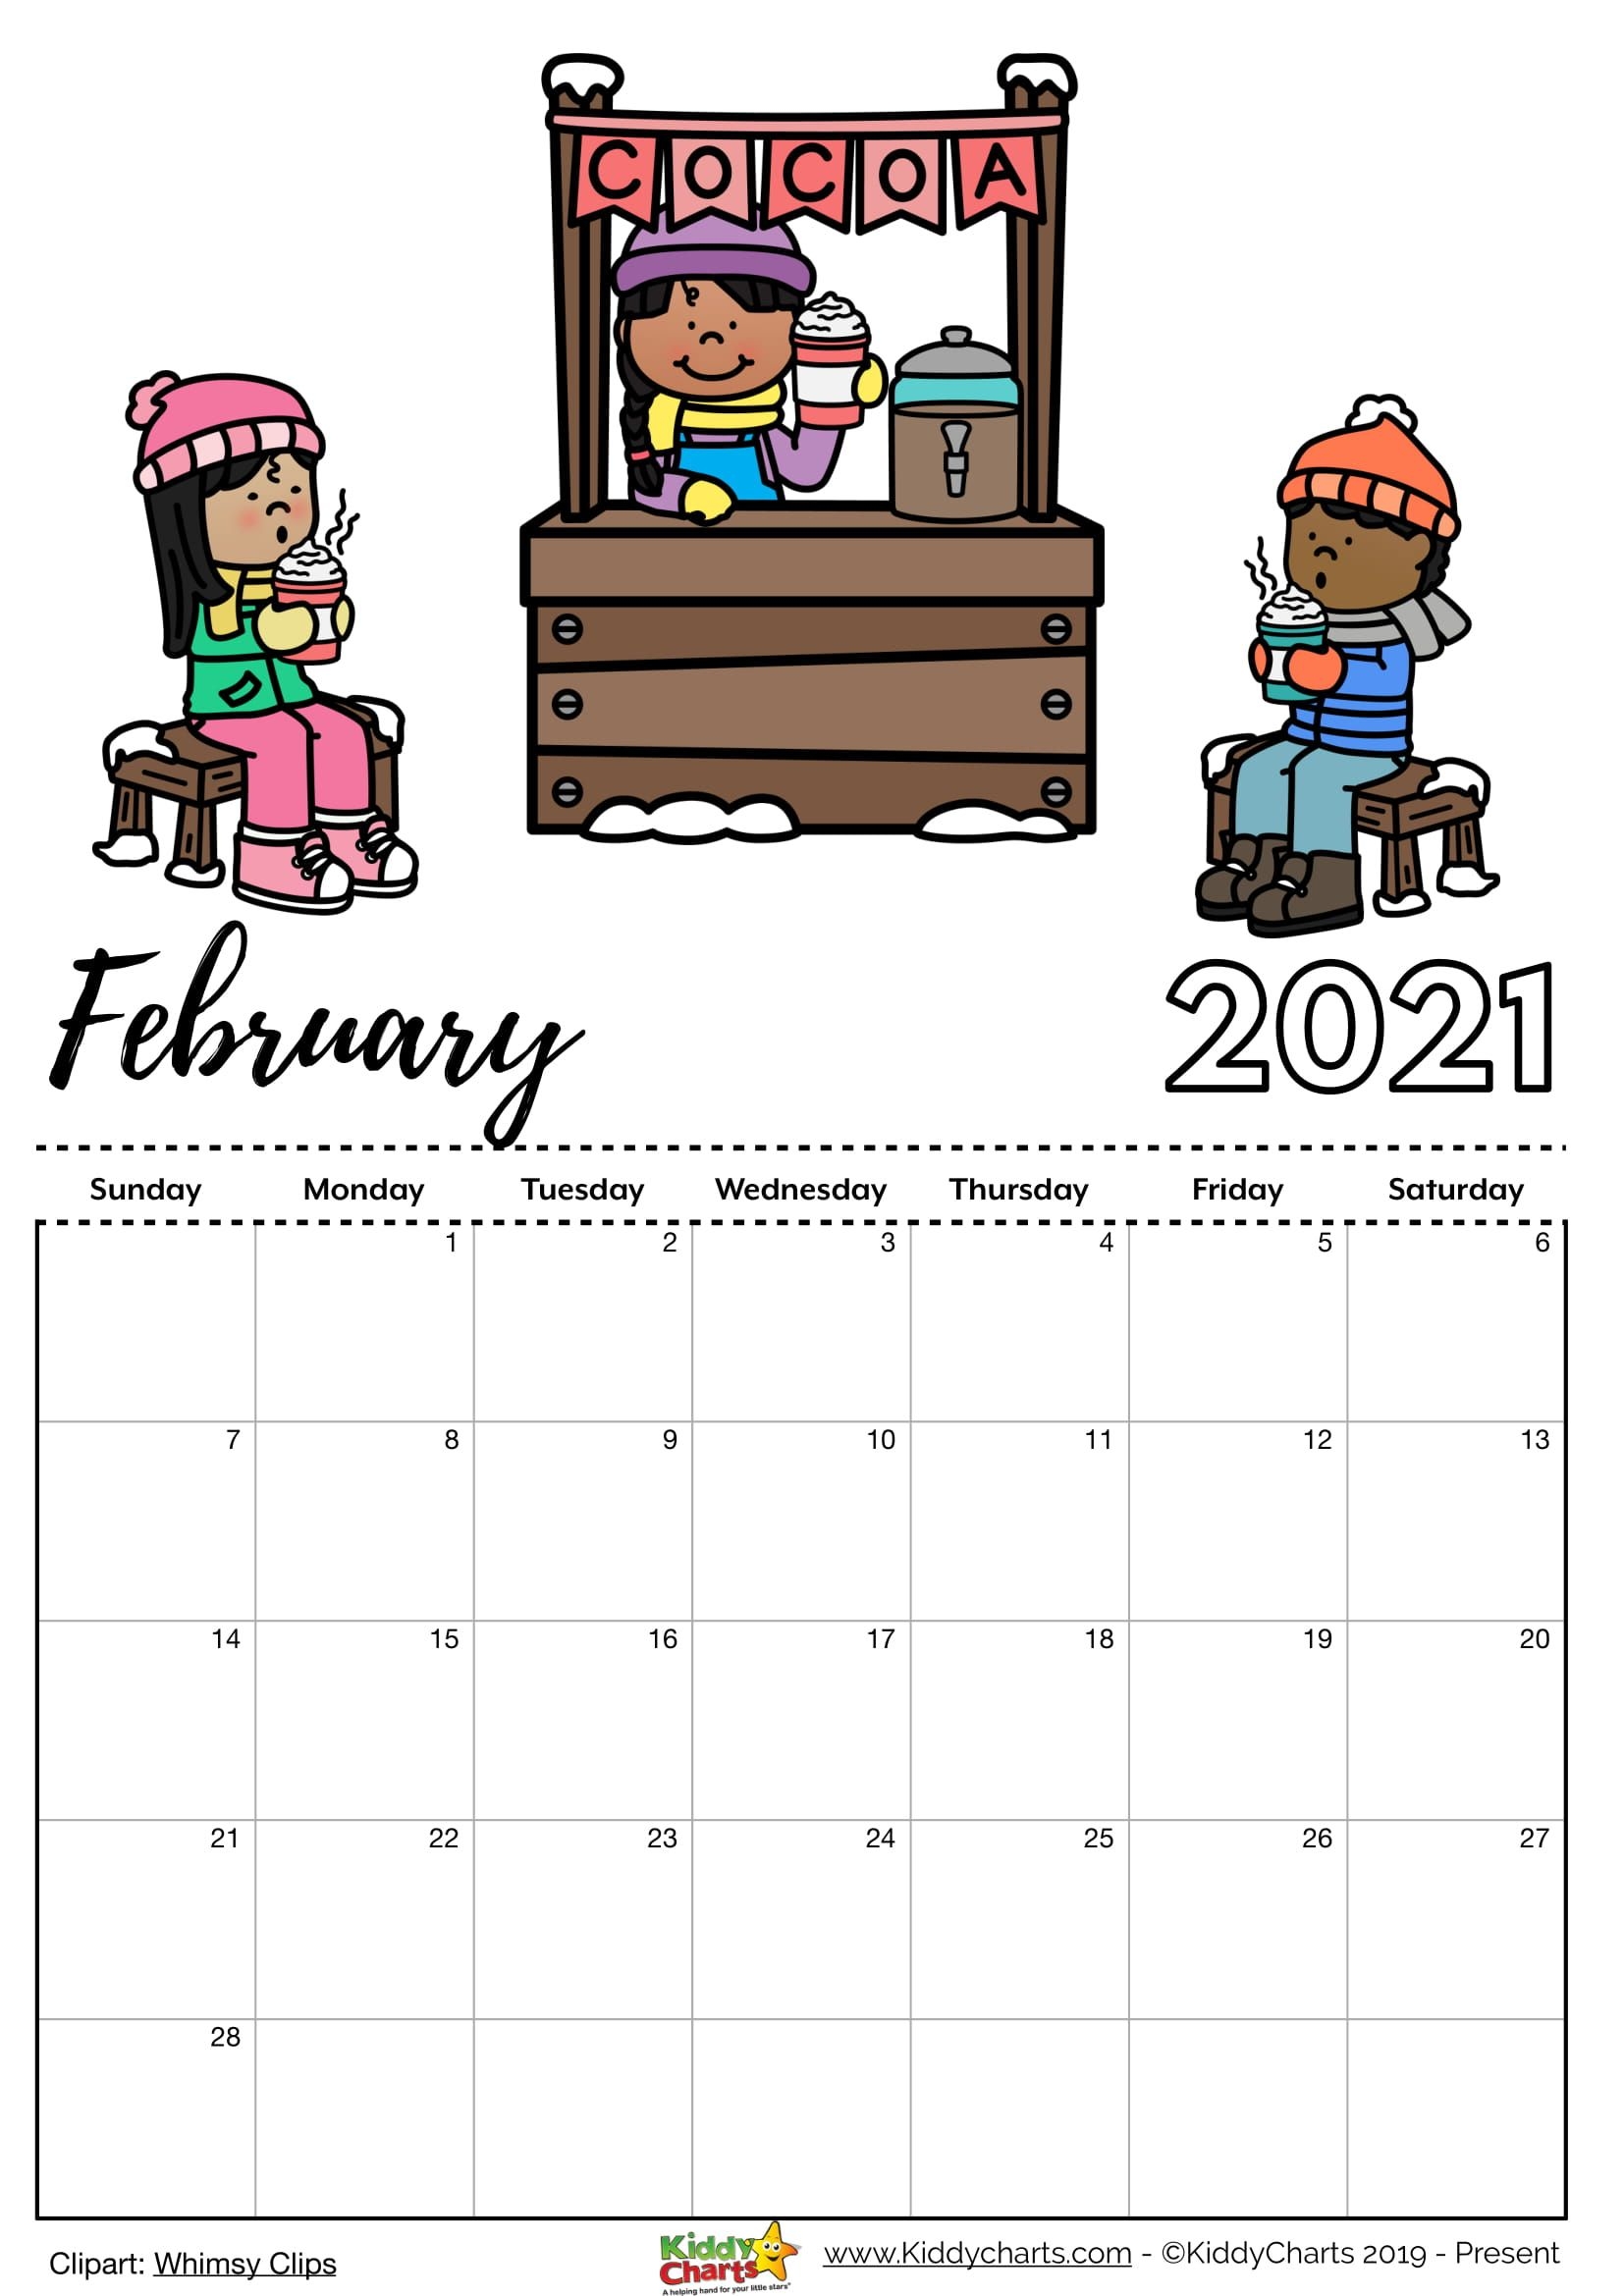 Free Printable 2021 Calendar: Includes Editable Version